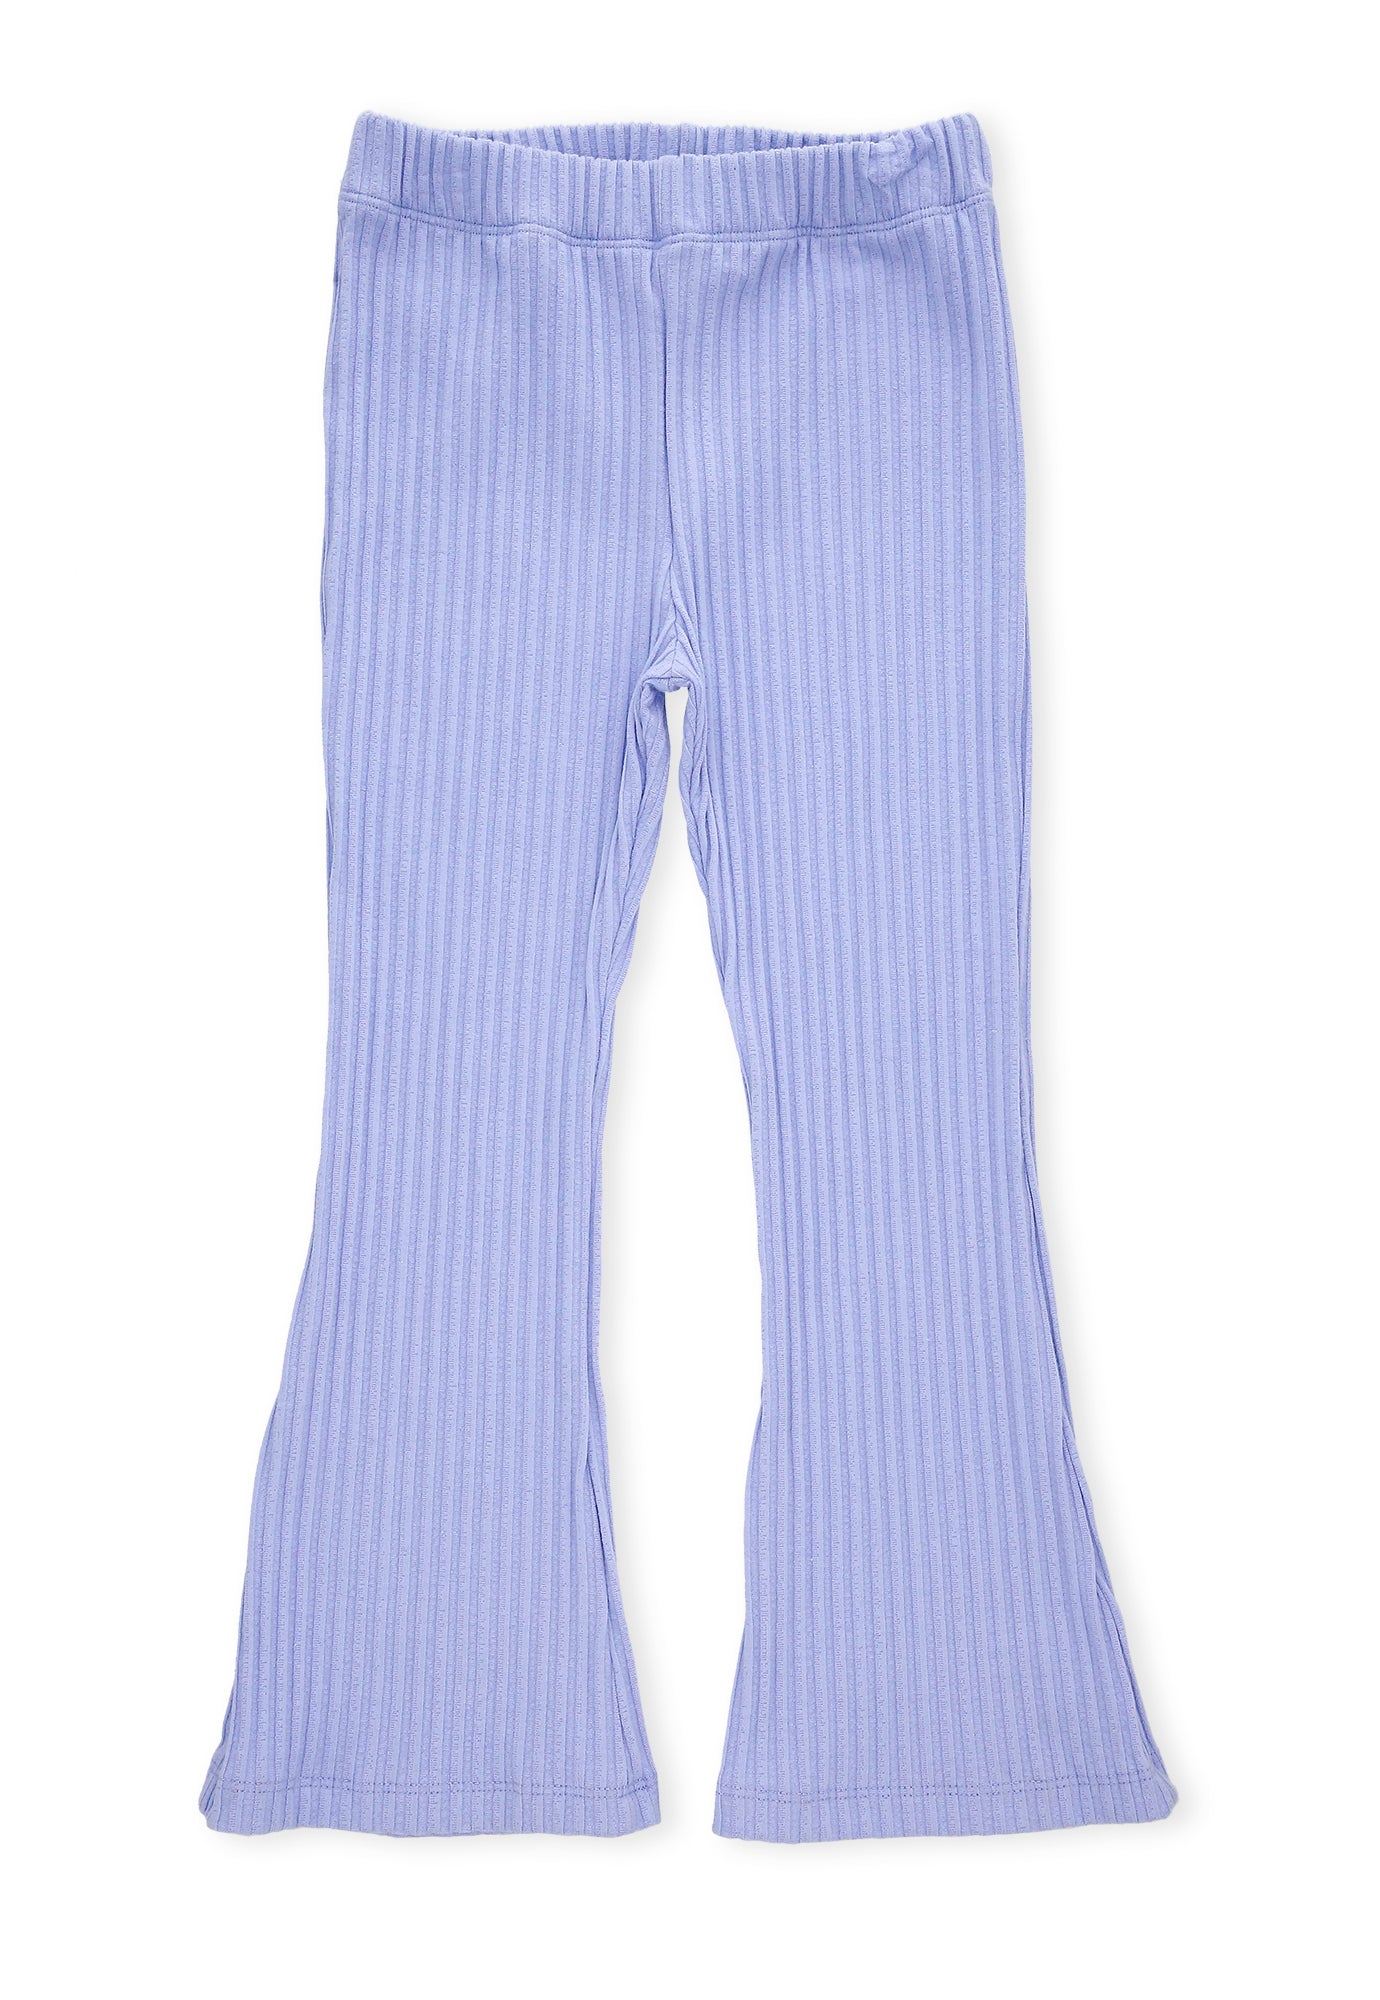 Pantalón morado lavanda fondo entero, con bota ancha y pretina resortada para bebé niña